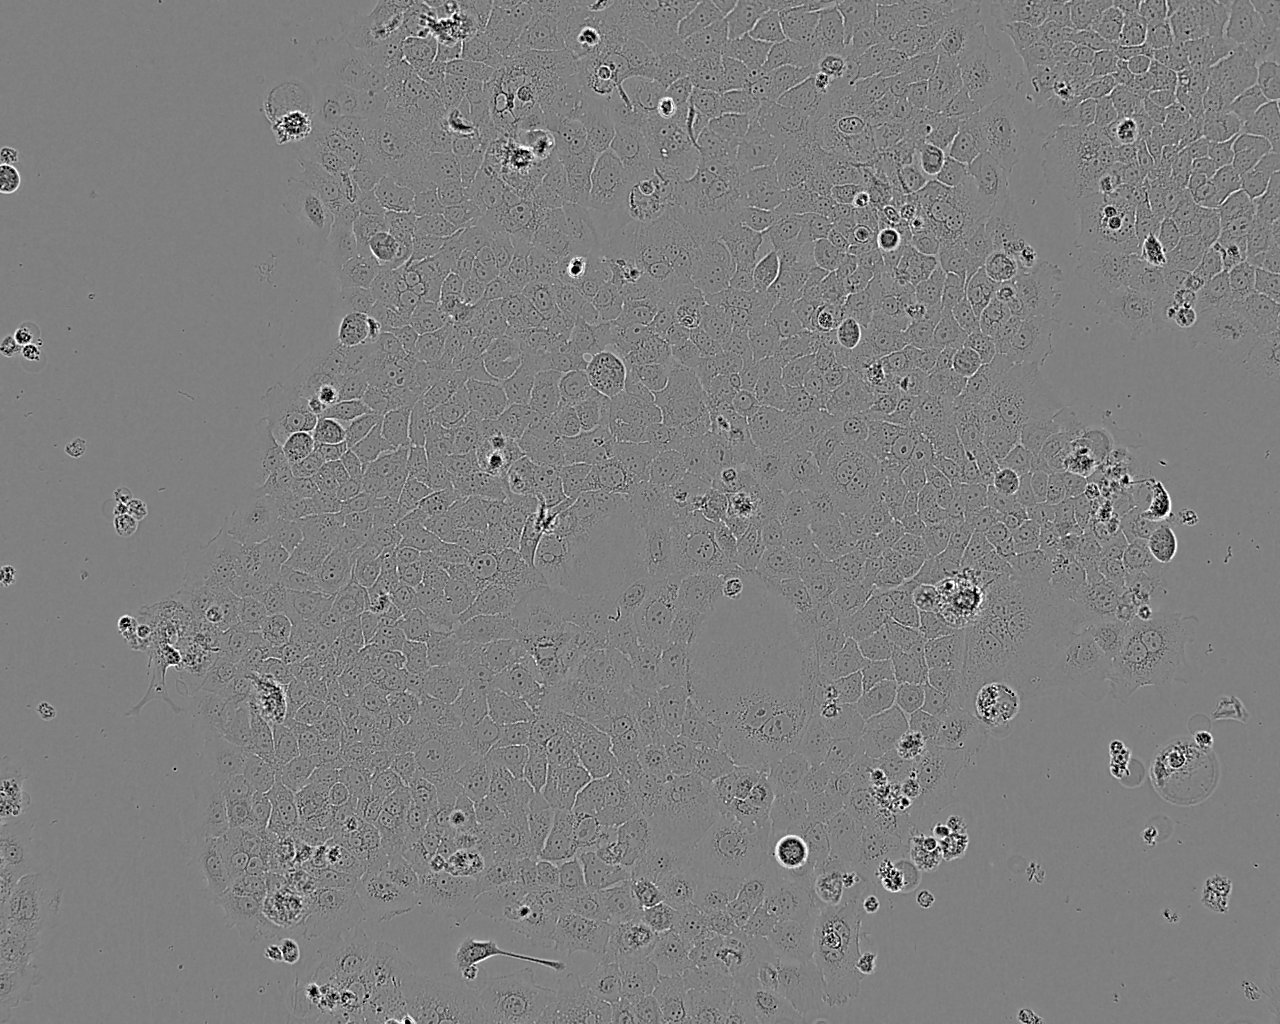 MIN6 Adherent小鼠胰岛β细胞系